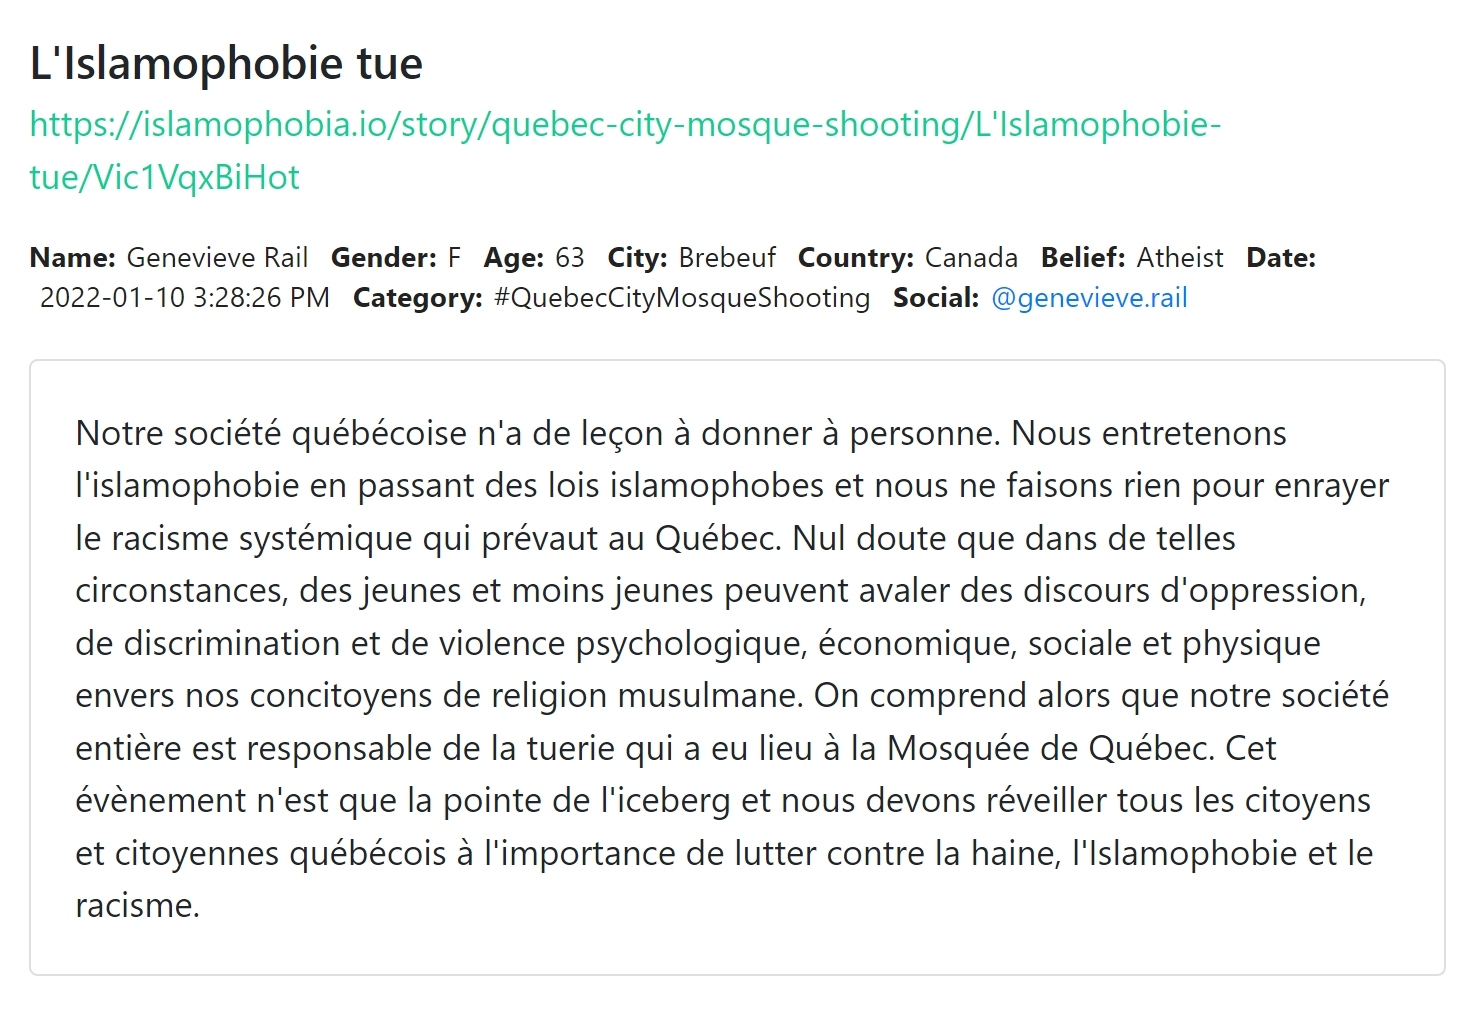 Lettre en français-https://islamophobia.io/